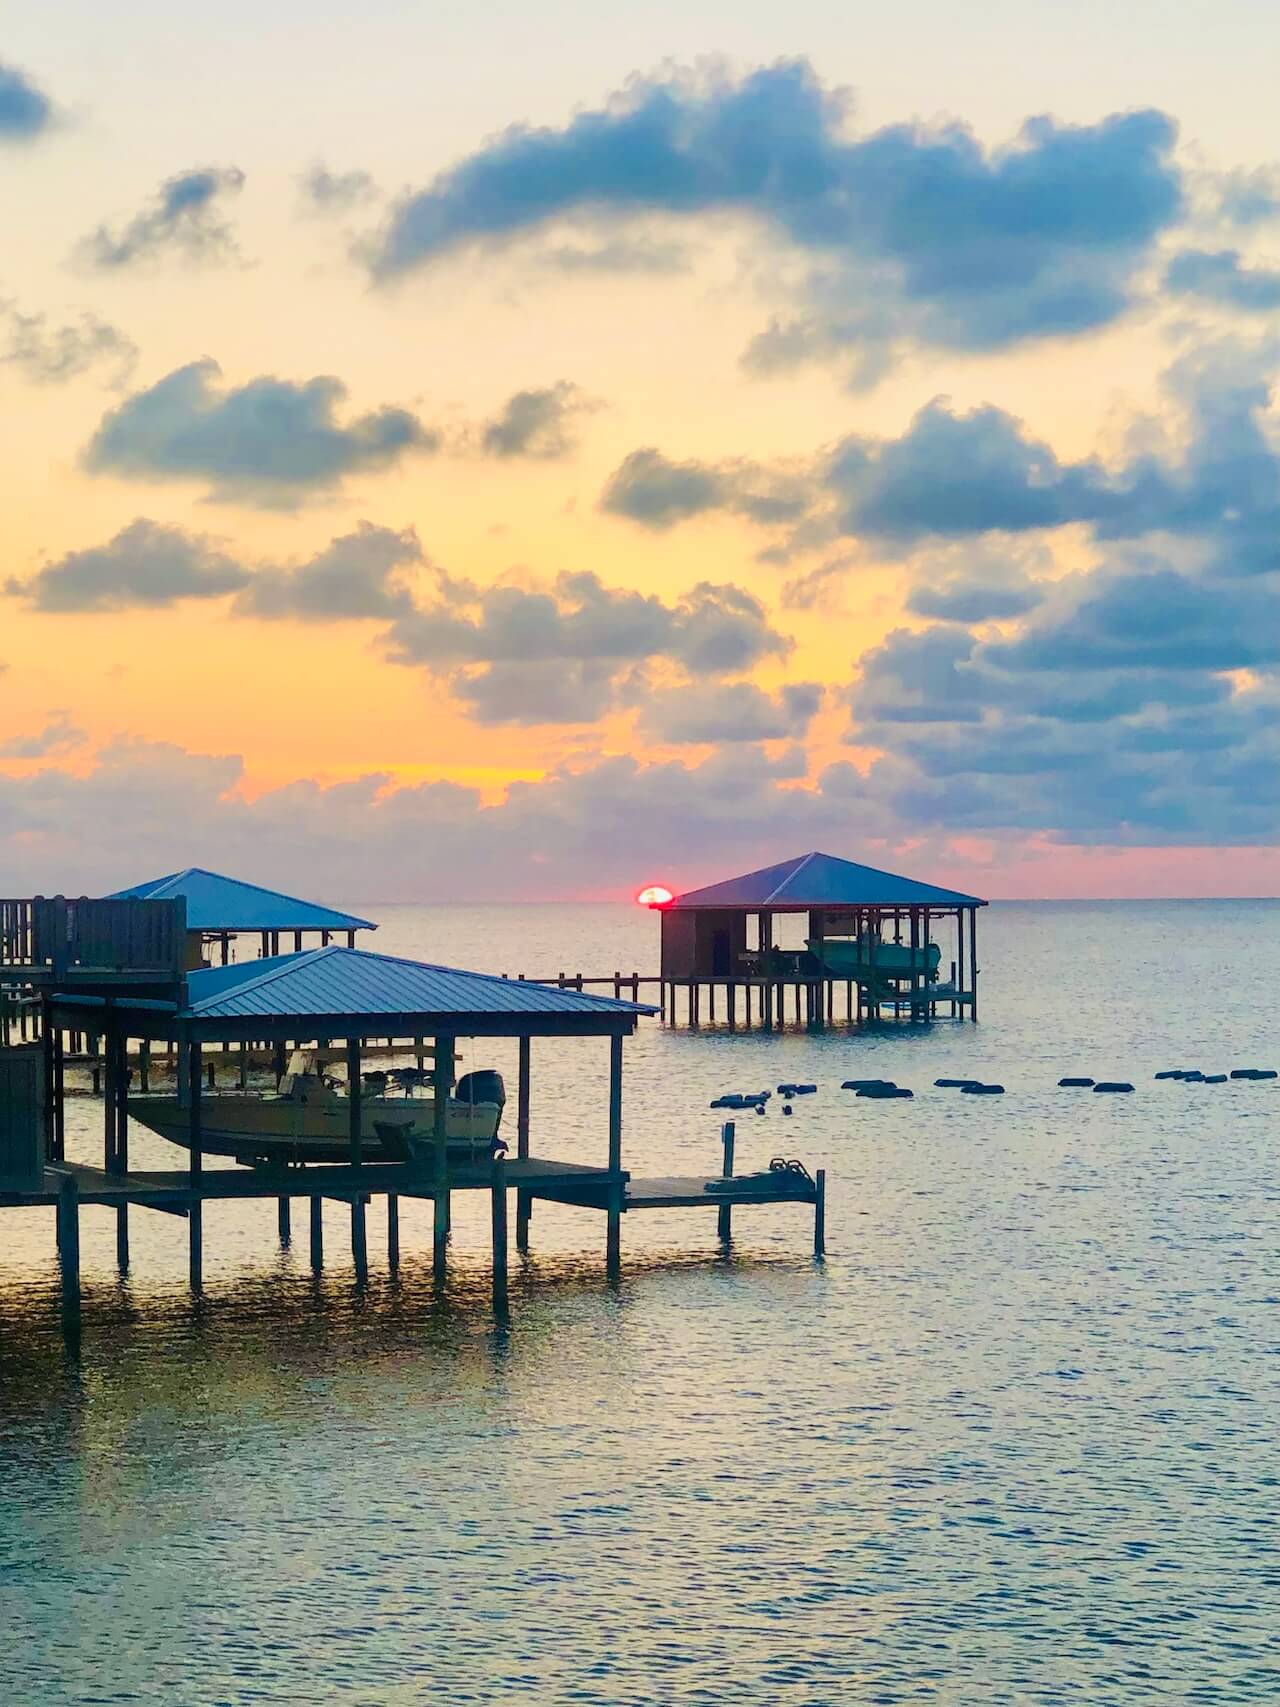 Sunset on dauphin island mobile bay alabama